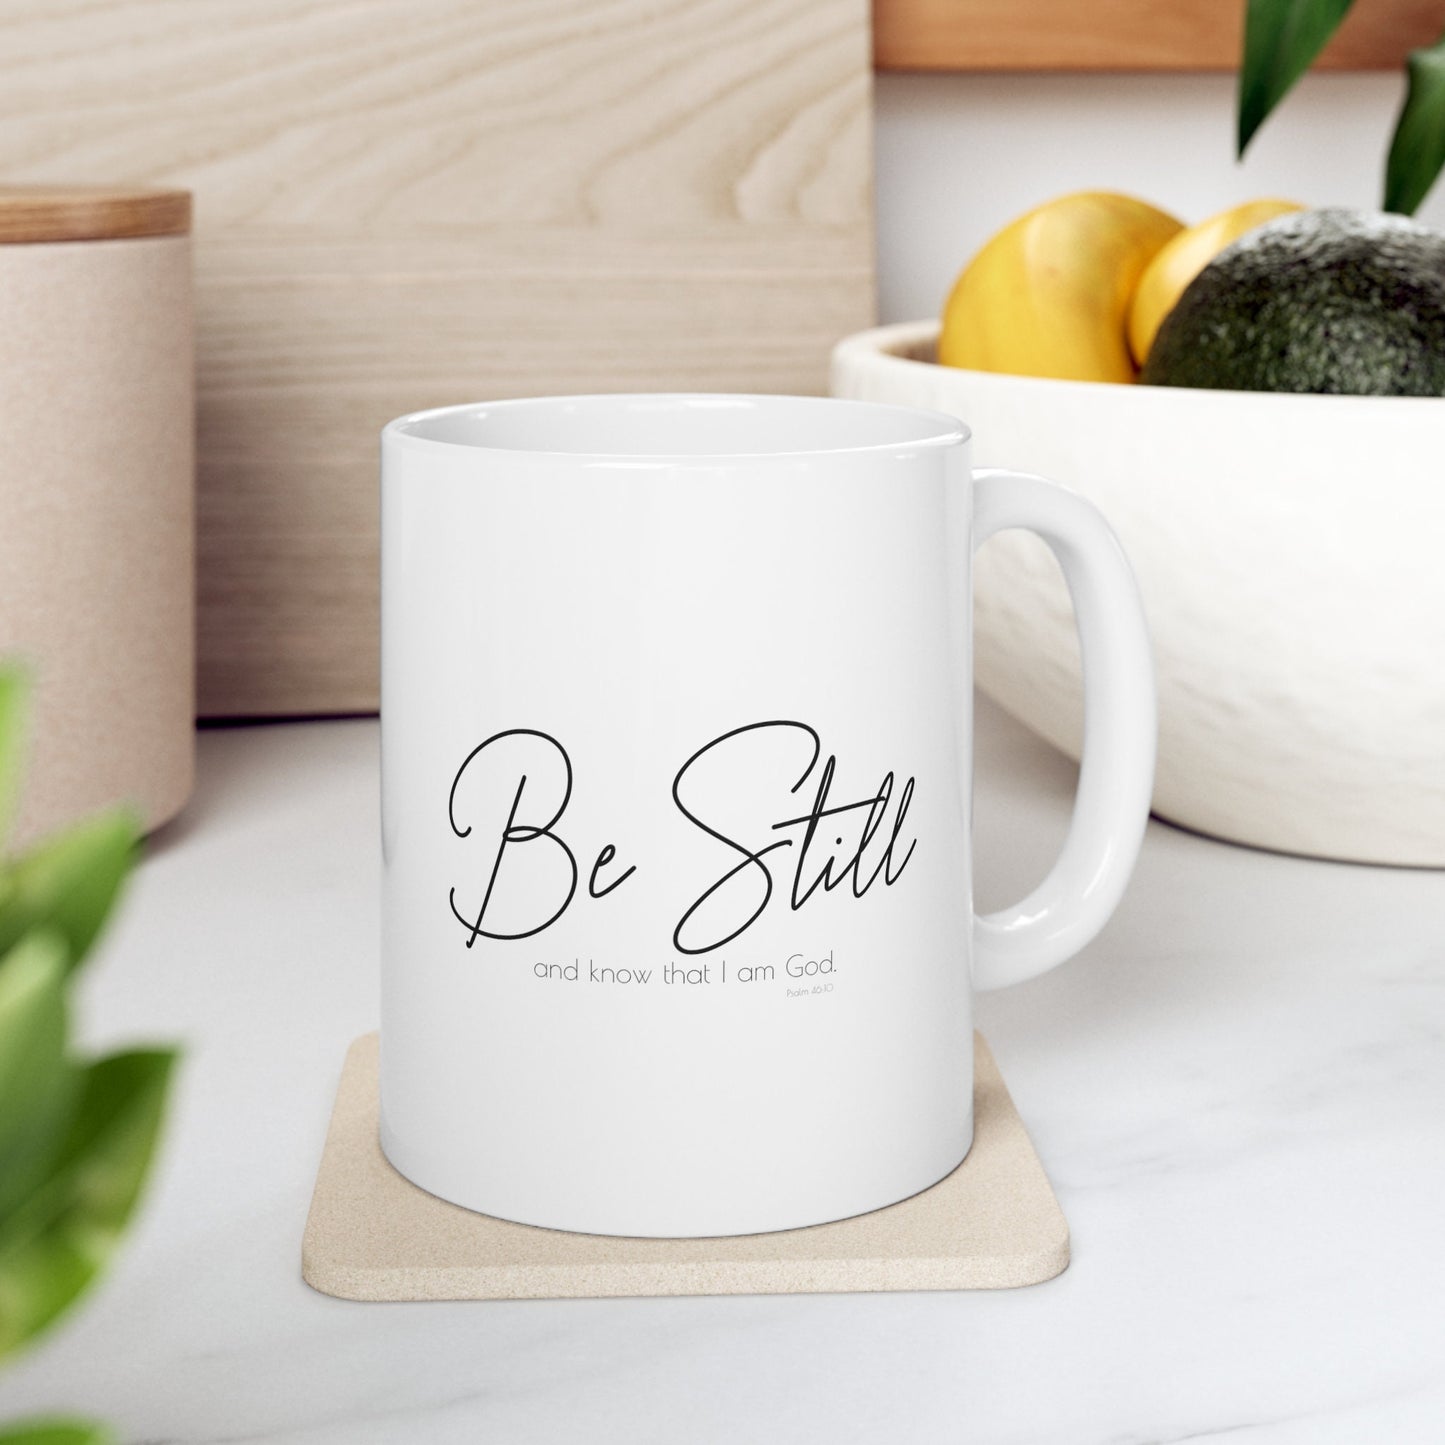 Be Still Mug, Scripture Mug, Religious Mug, Gift for Her, Gift for Him, Ceramic Mug 11oz